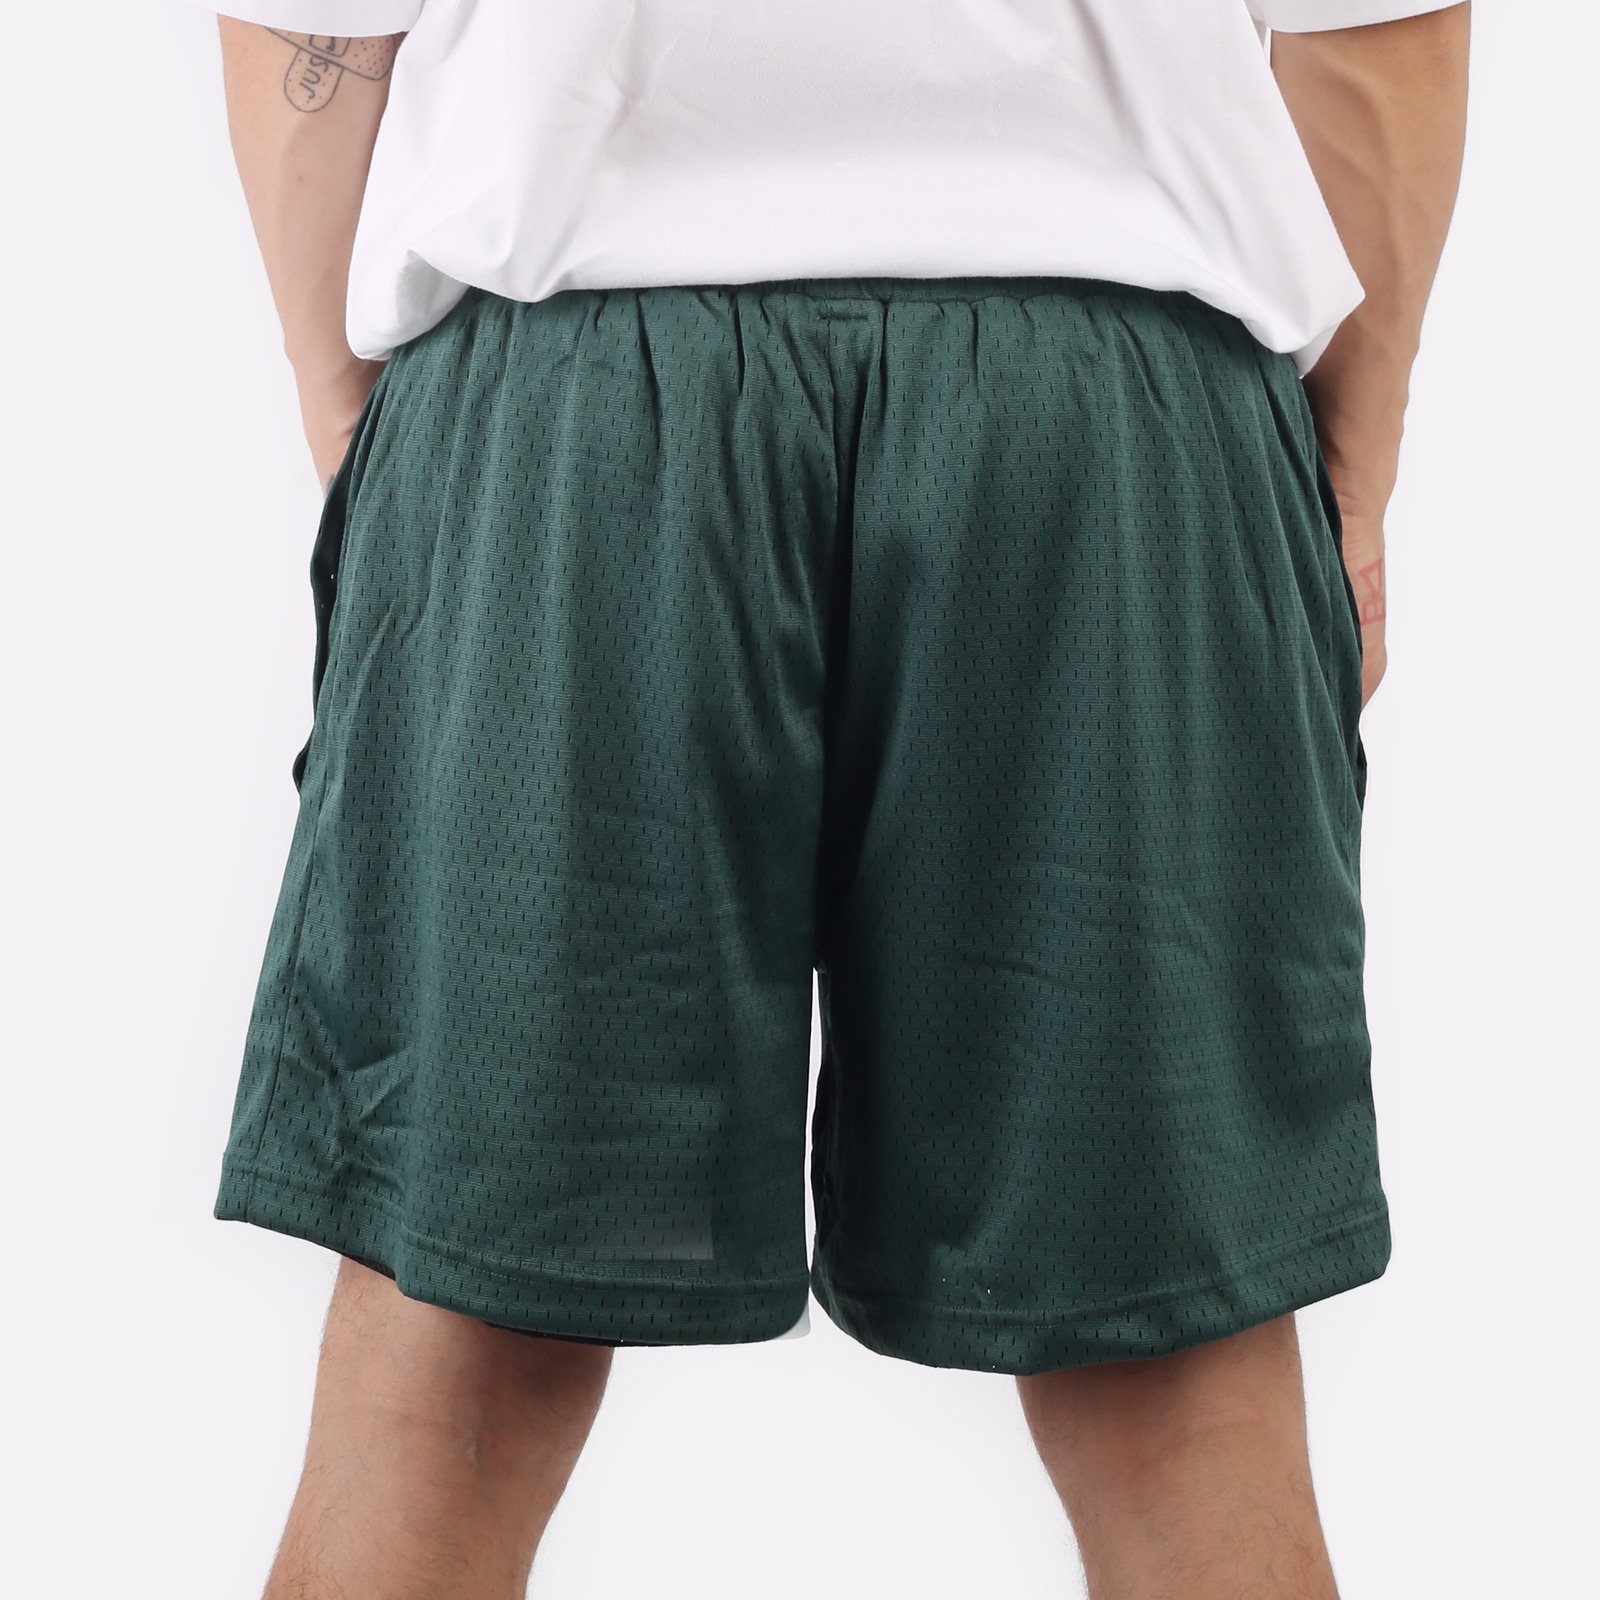 мужские зеленые шорты  Hard Open Run Open run-grn/gold - цена, описание, фото 3